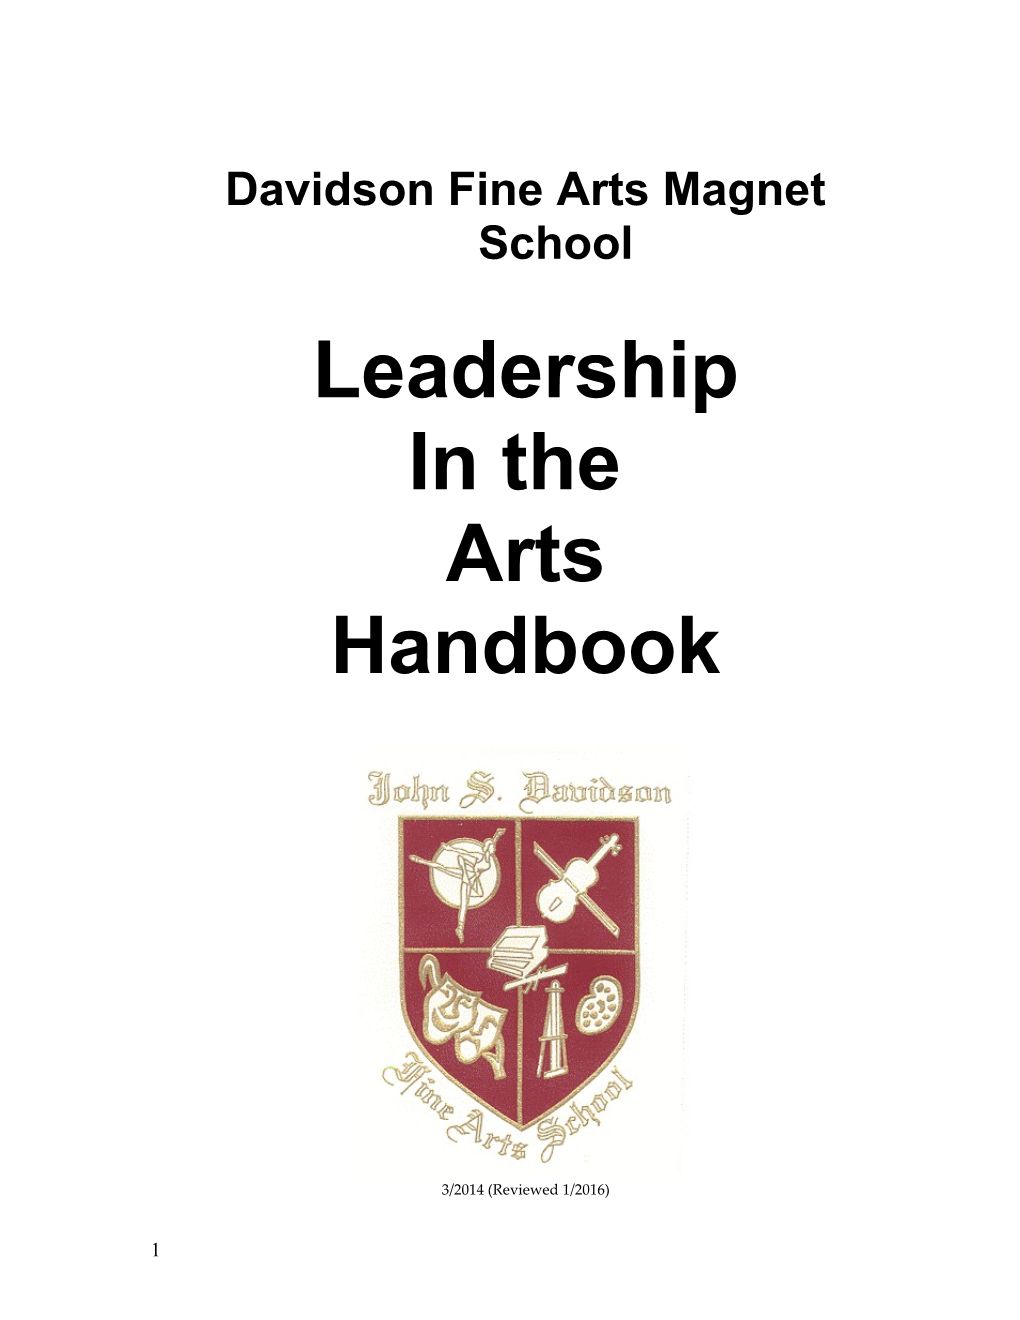 Davidson Fine Arts Magnet School